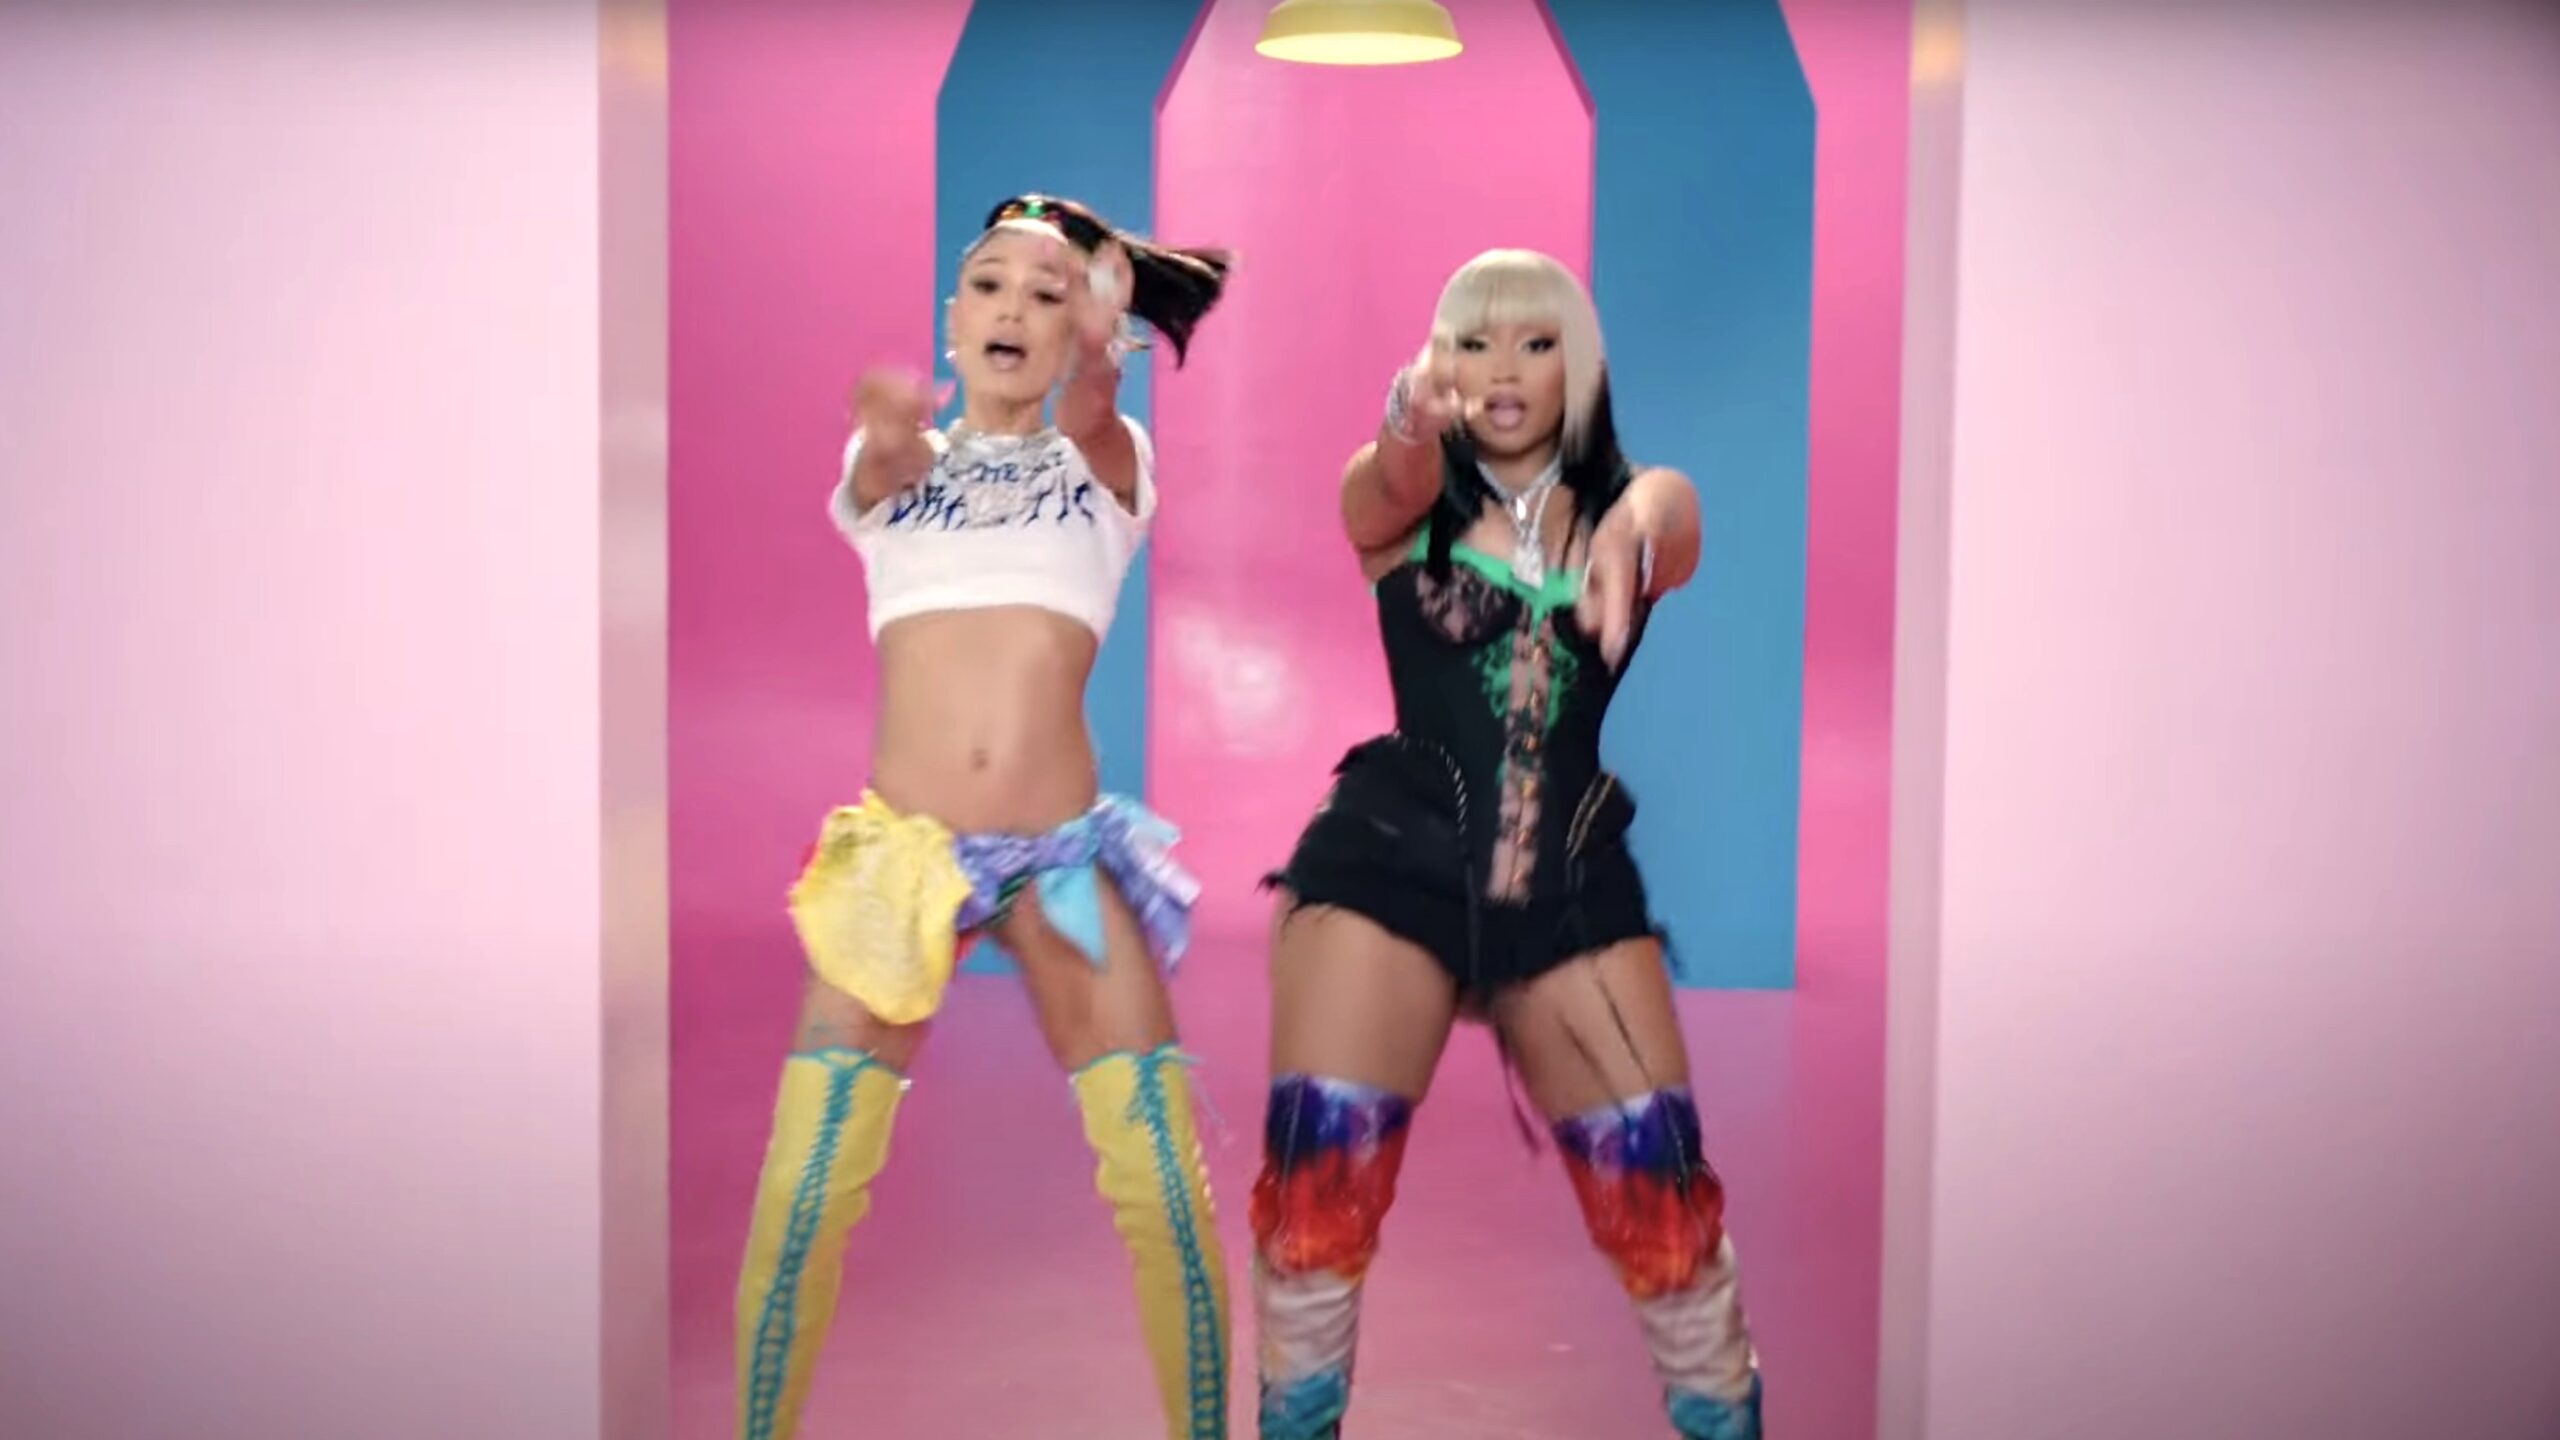 Coi Leray and Nicki Minaj's new music video “BLICK BLICK” is # 1